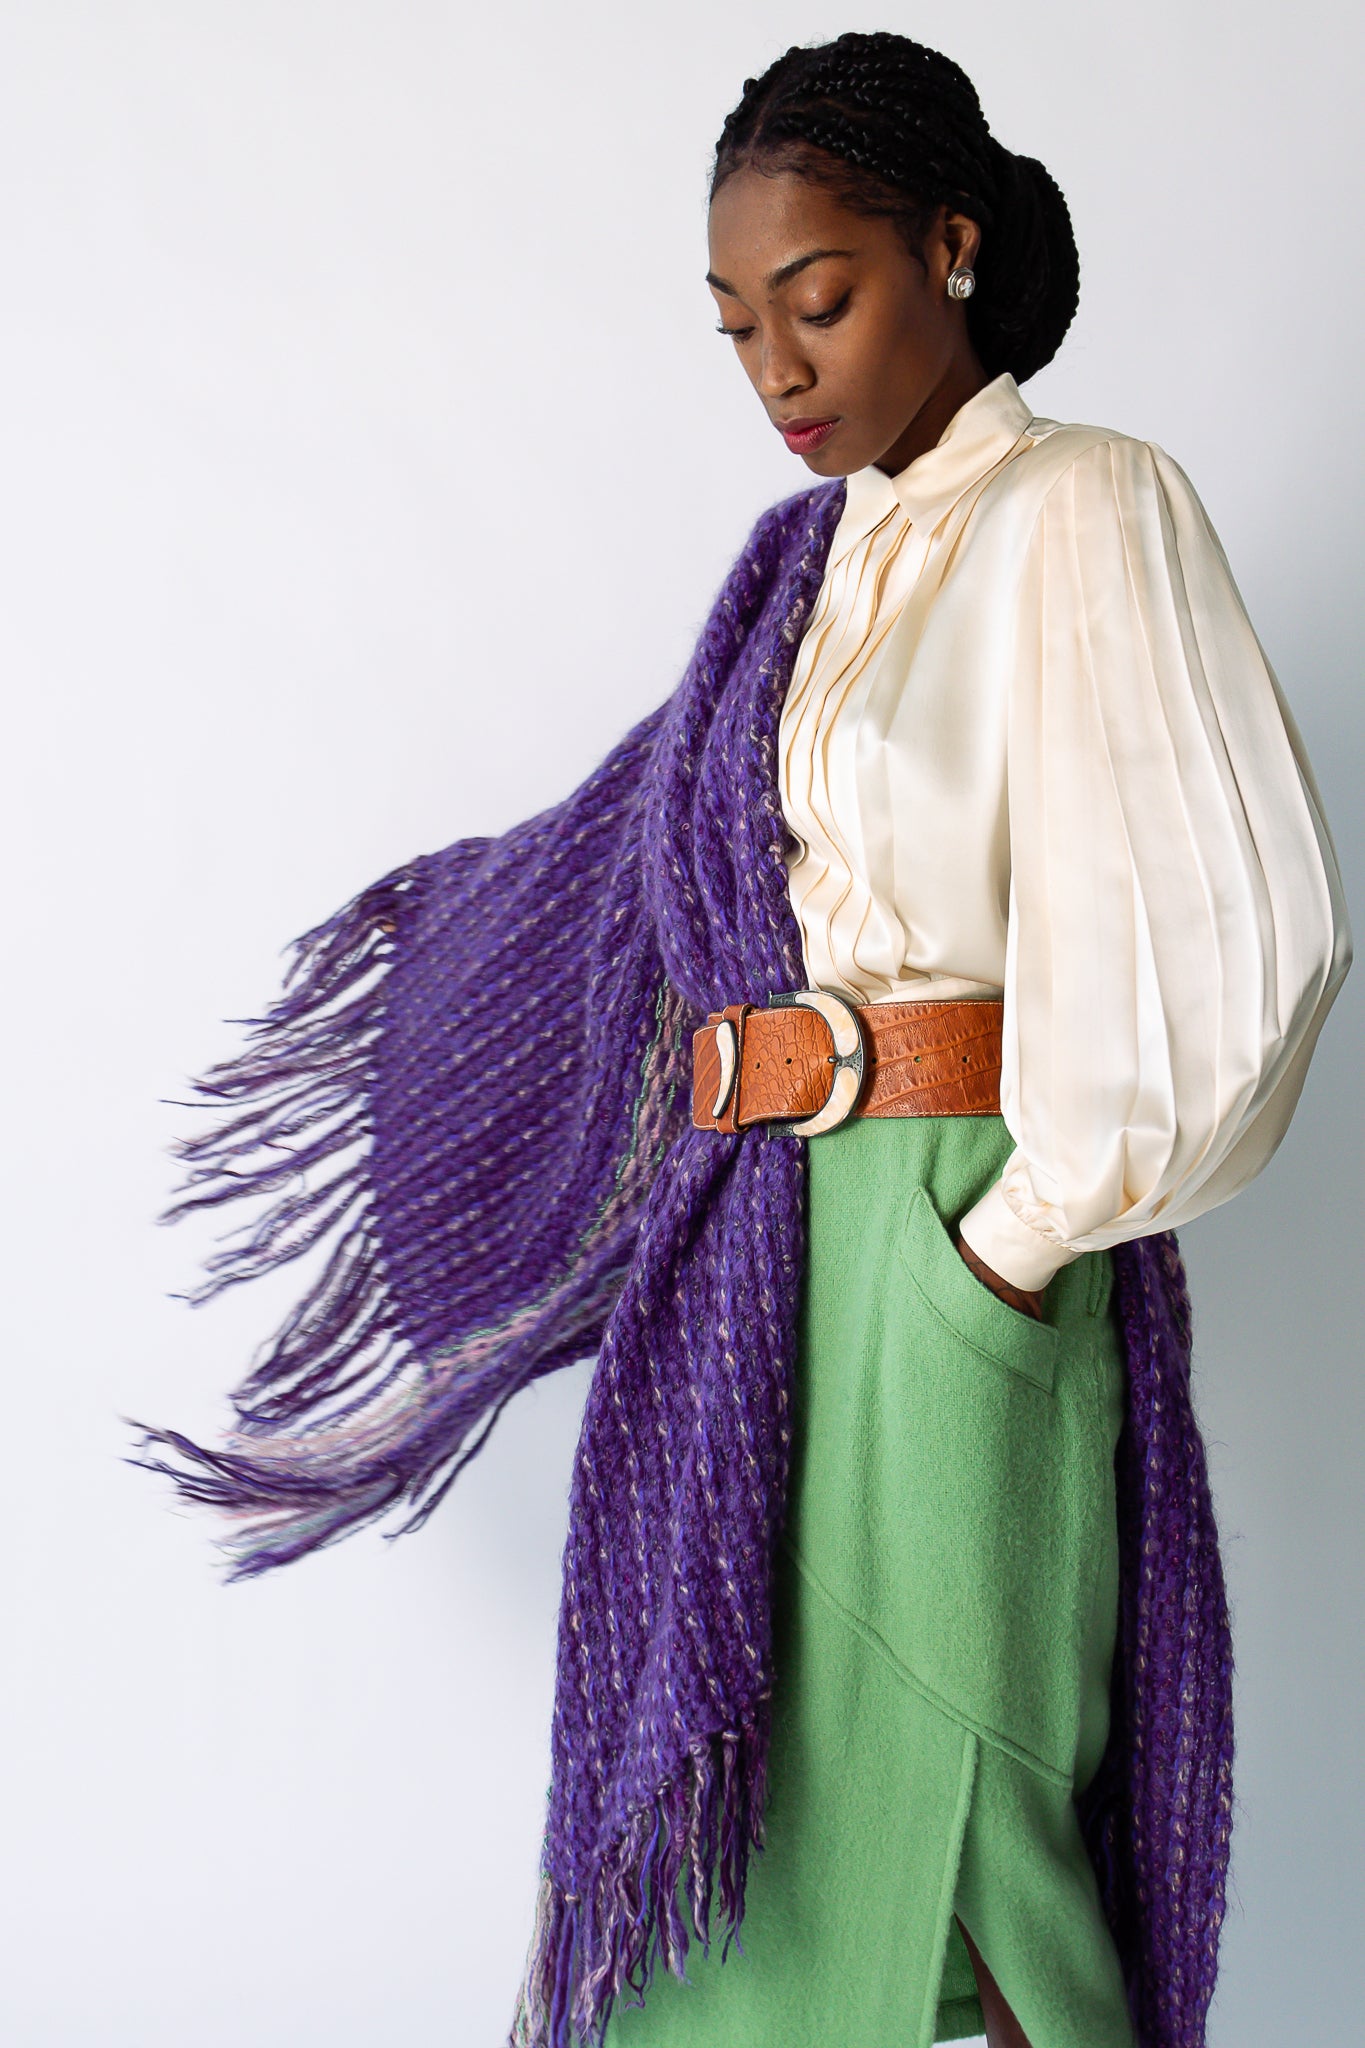 Girl wearing purple yarn shawl mint skirt and belt at Recess Los Angeles